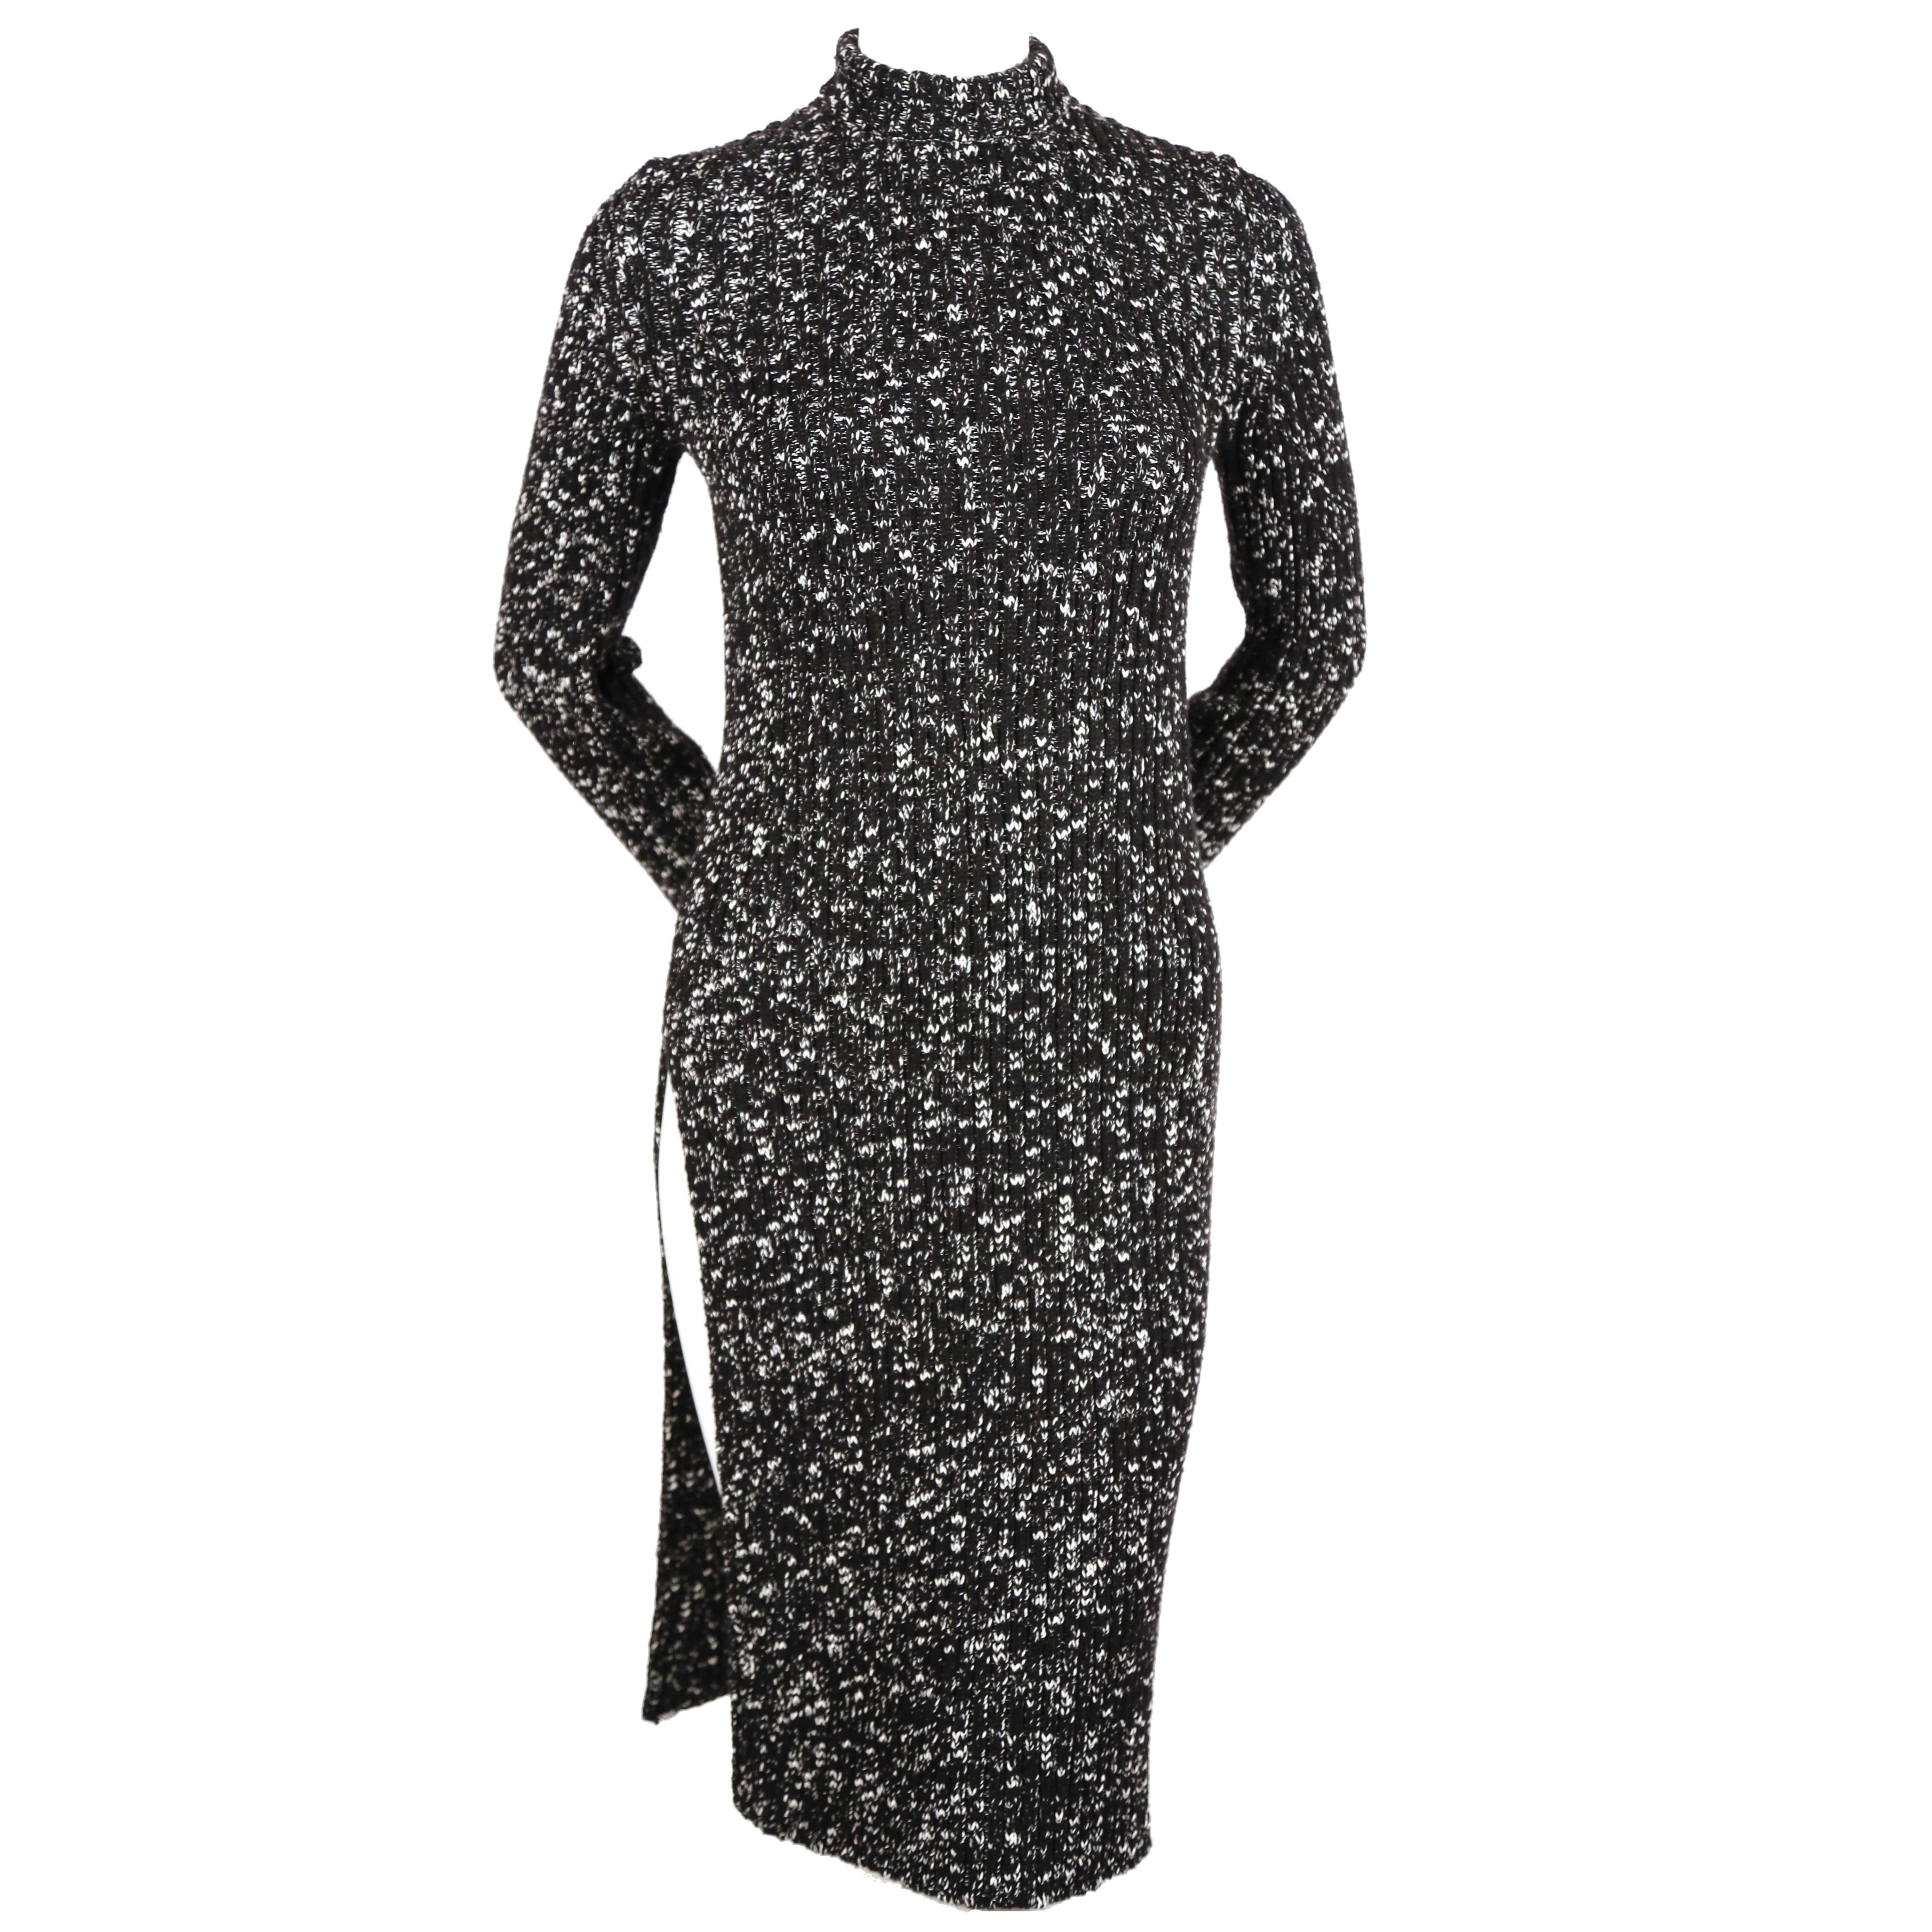 CELINE Phoebe Philo black & white tunic sweater dress - RUNWAY